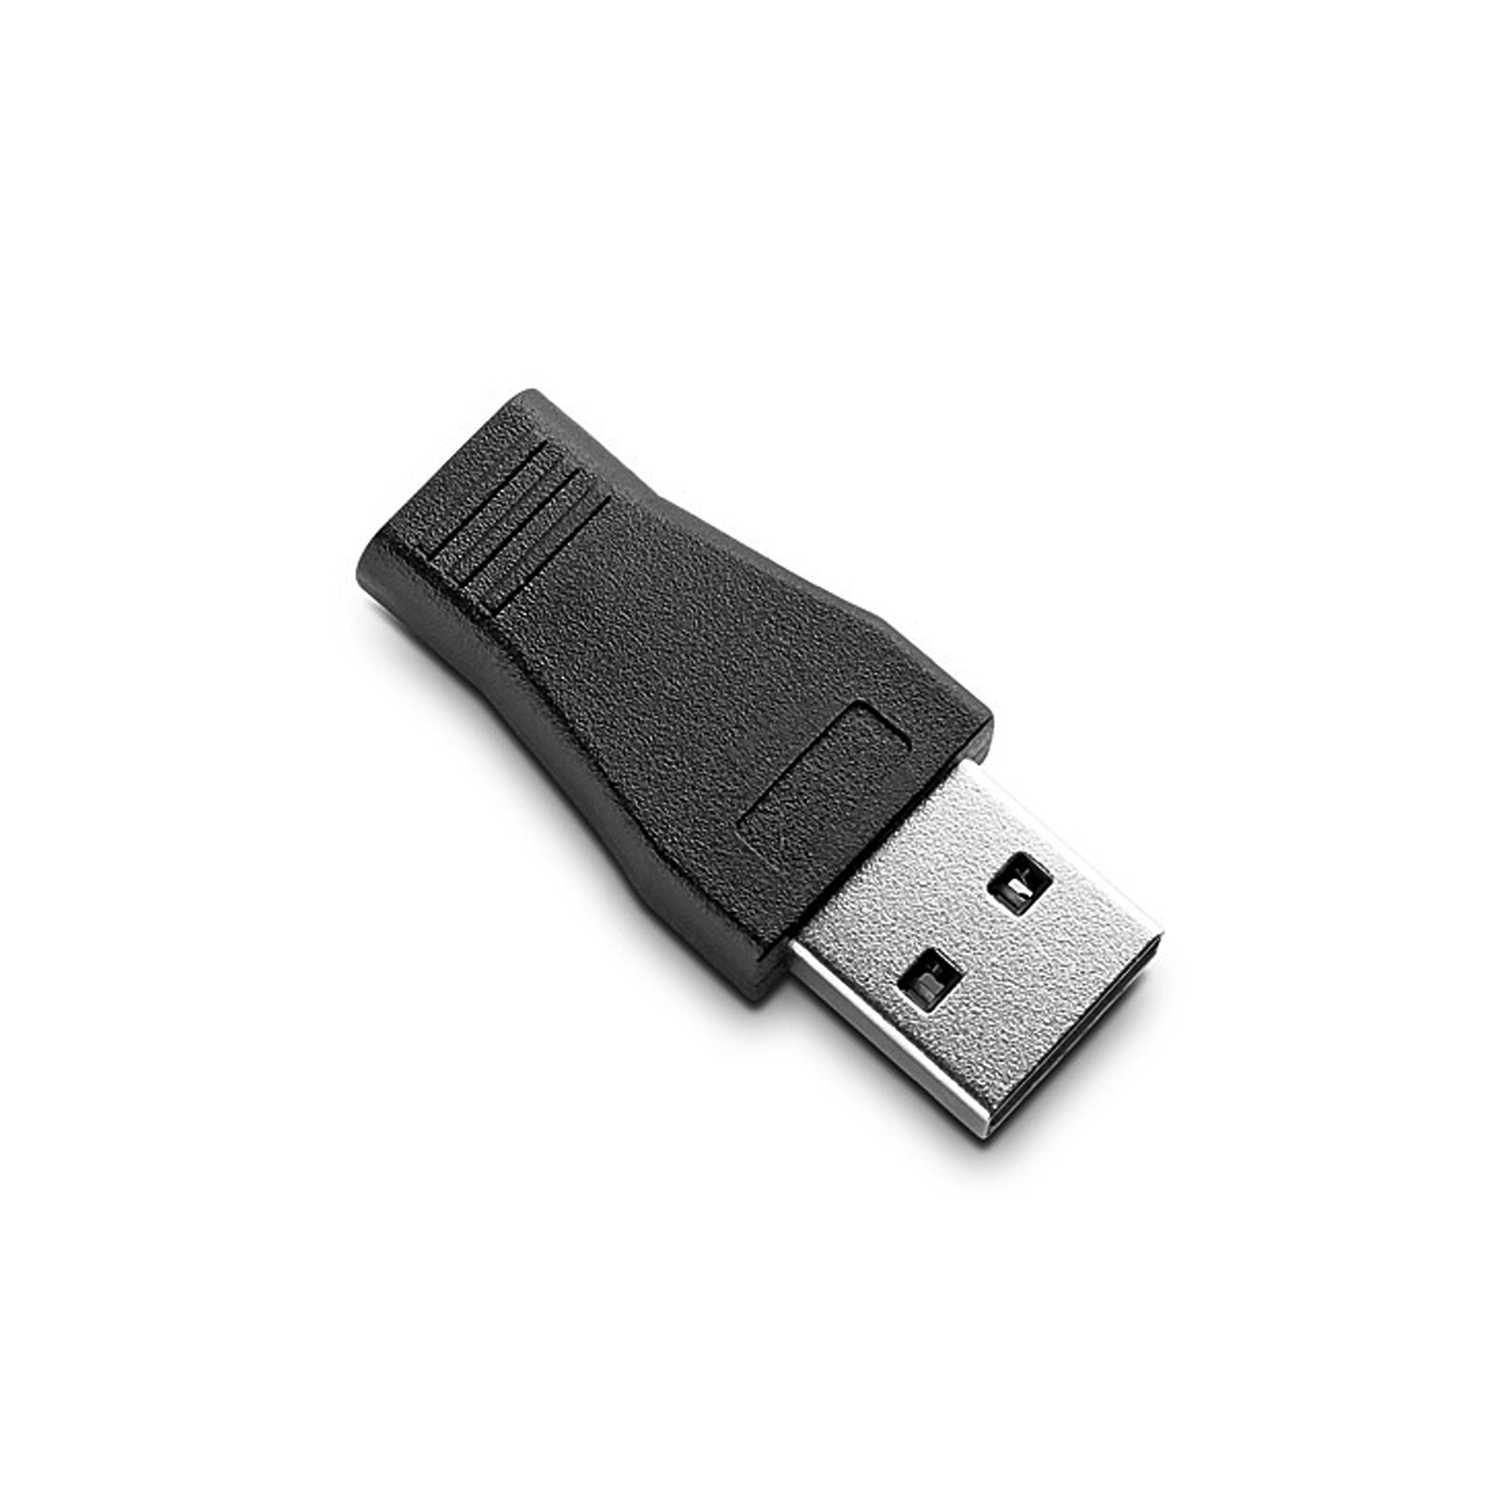 USB C Adaptateur, USB 3.1 Type C femelle vers USB 3.0 A mâle